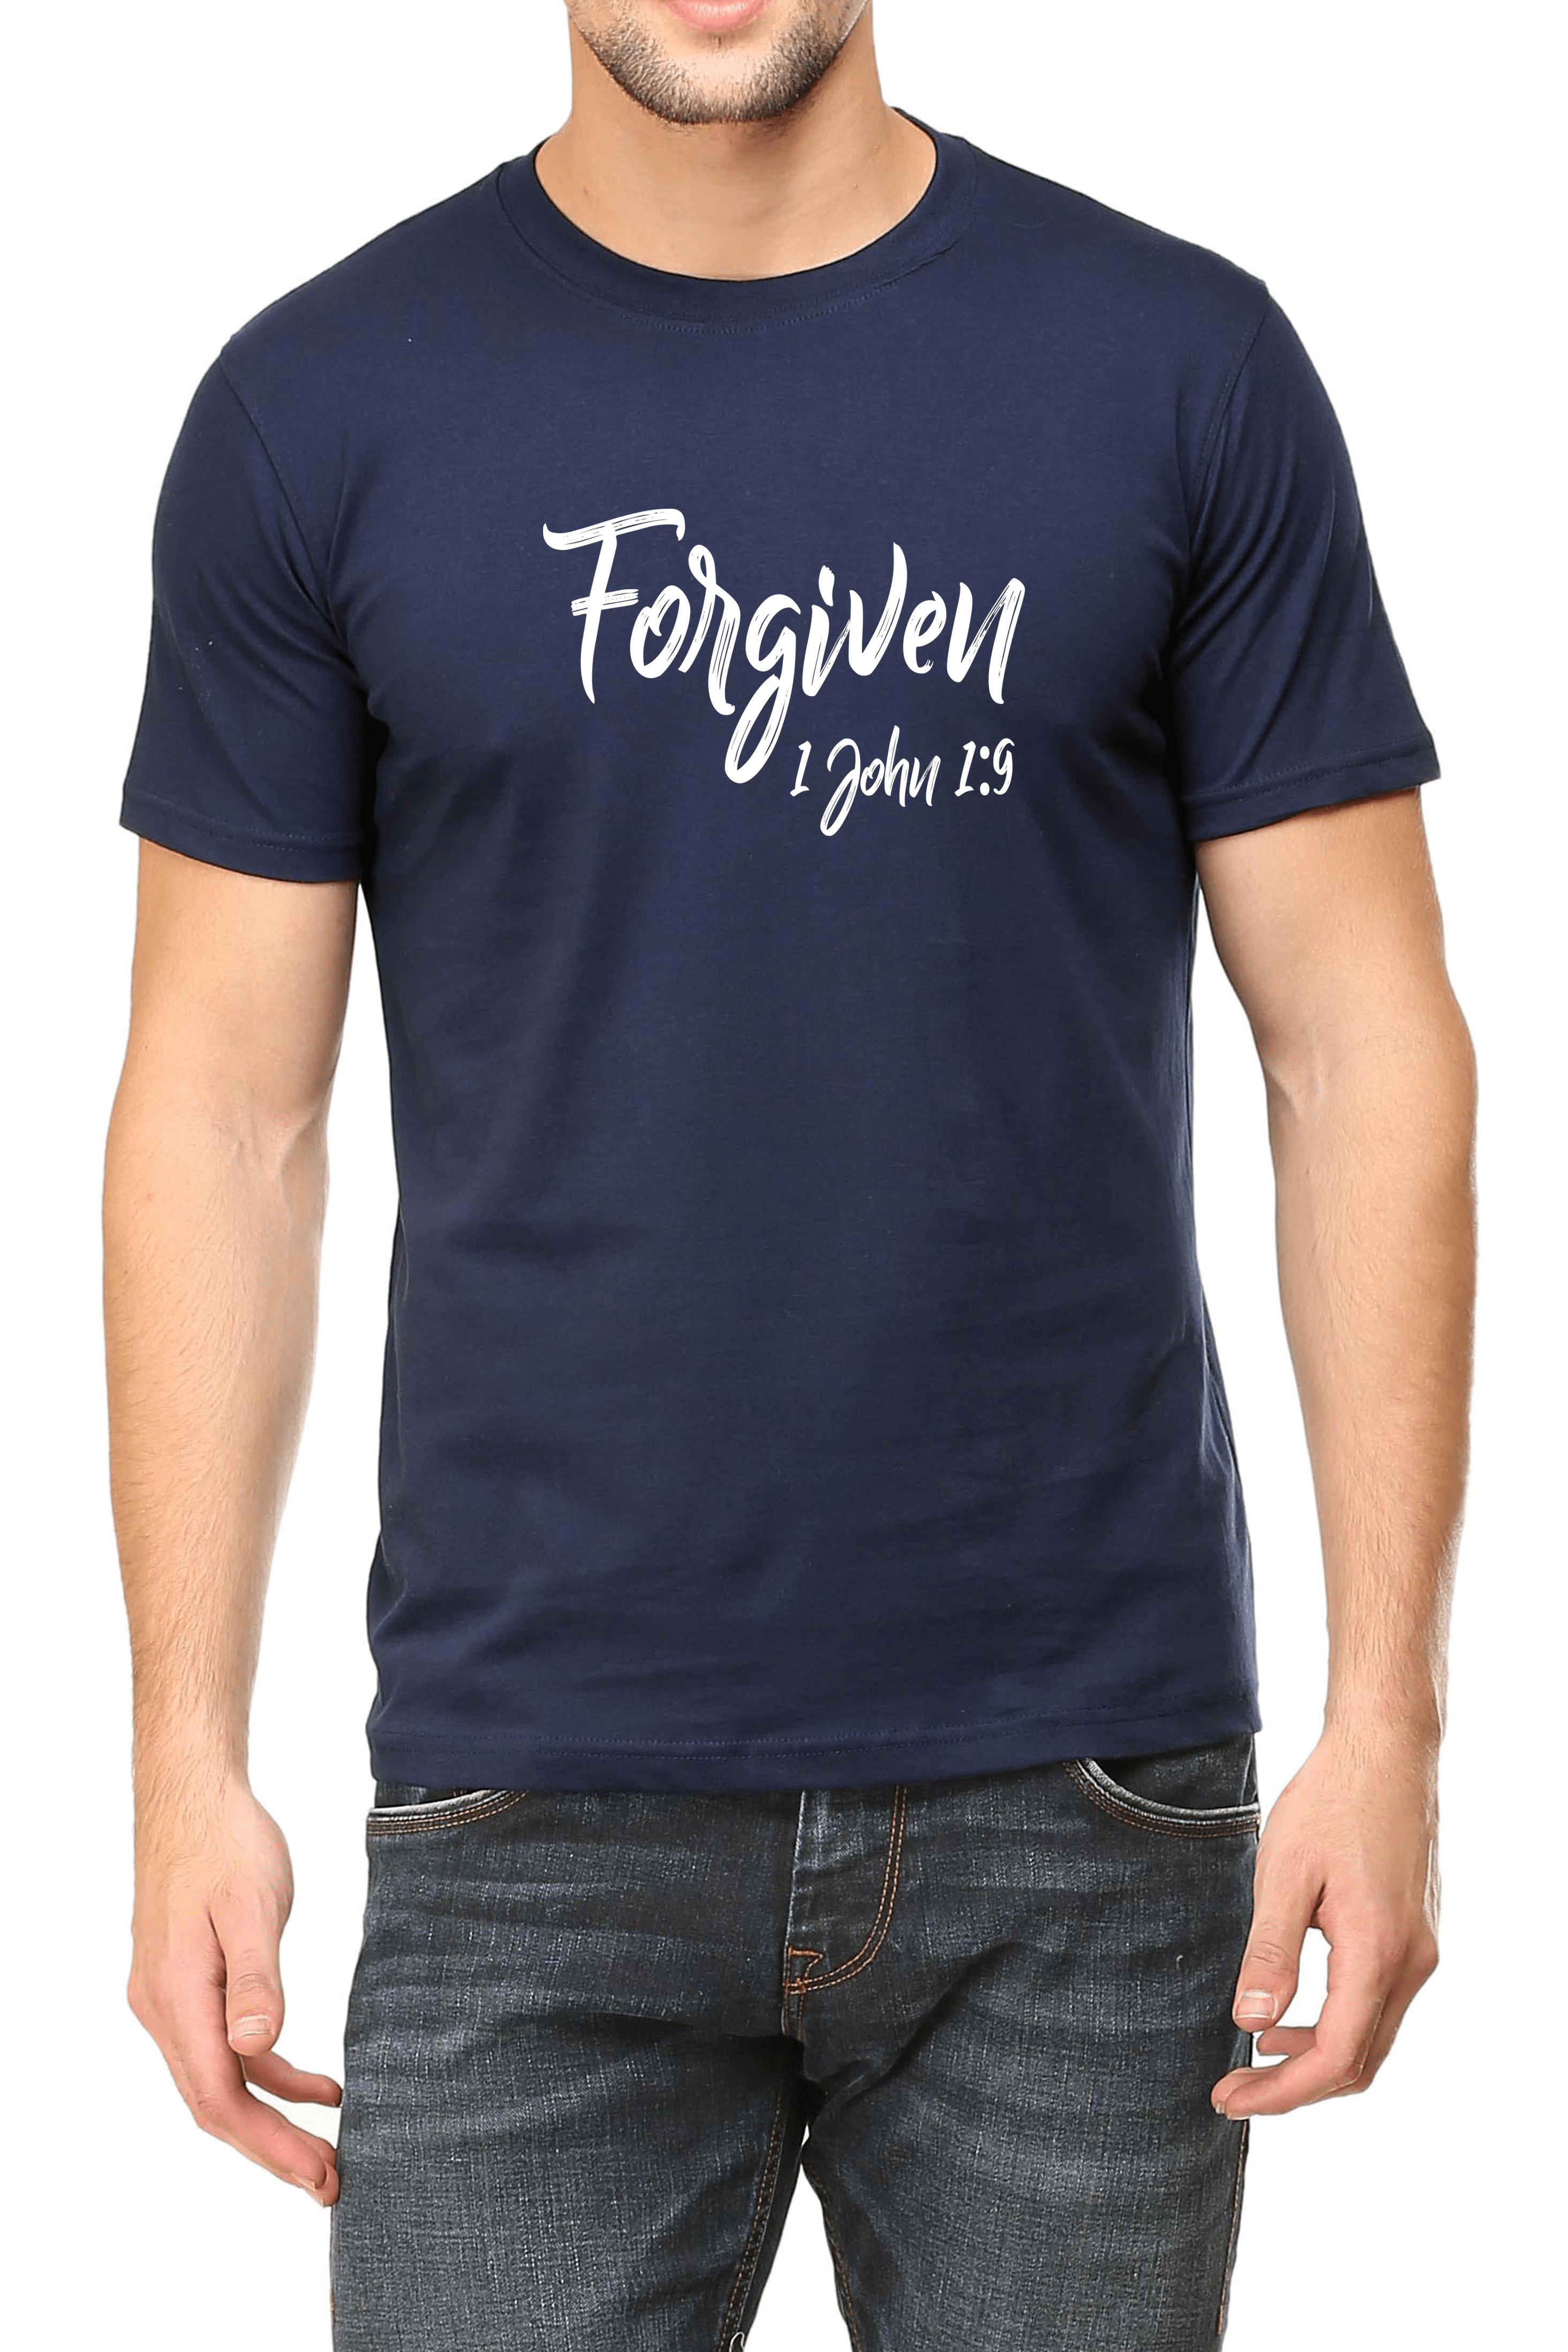 Living Words Men Round Neck T Shirt S / Navy Blue Forgiven 1 John 1:9 - Christian T-Shirt